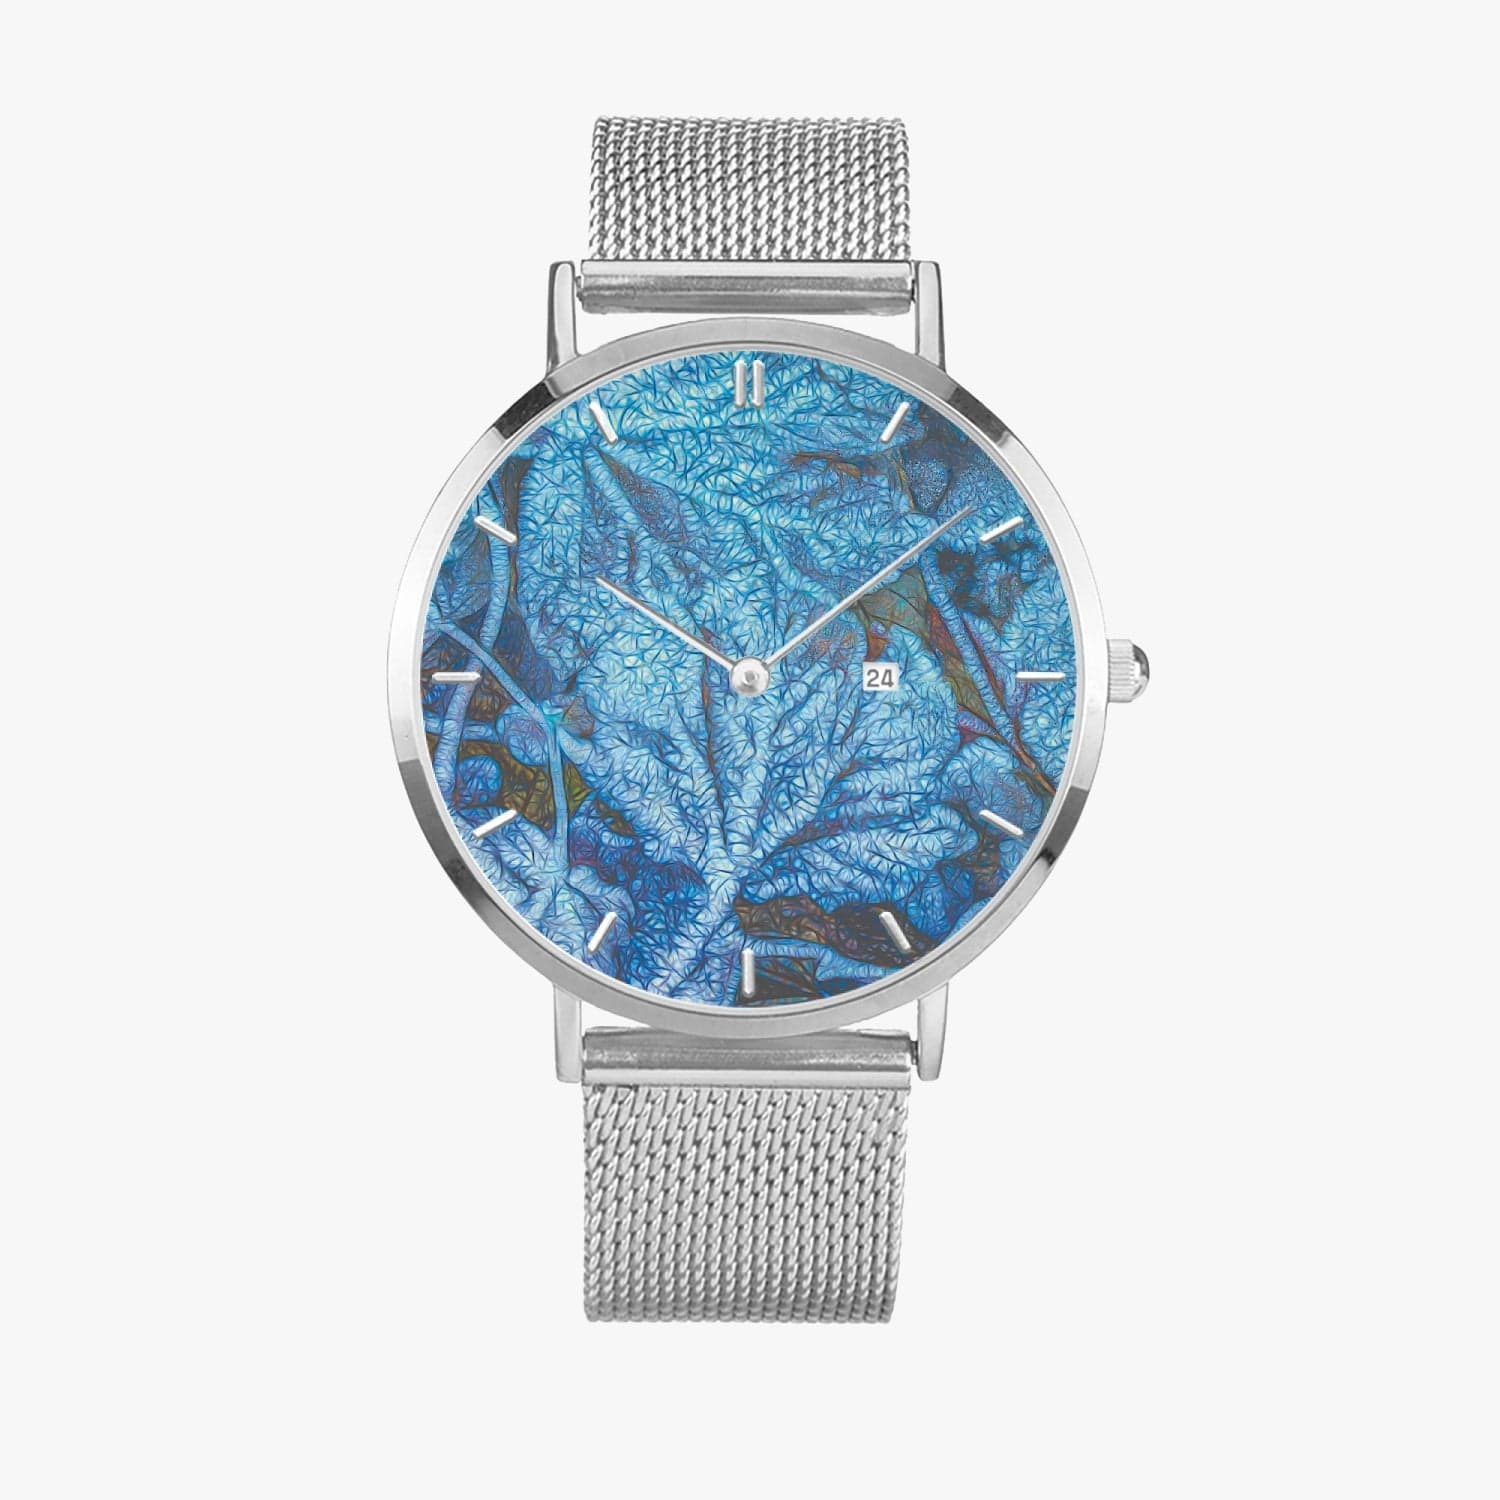 Frozen blue leafs. Stainless Steel Perpetual Calendar Quartz Watch (With Indicators), by Sensus Studio Design